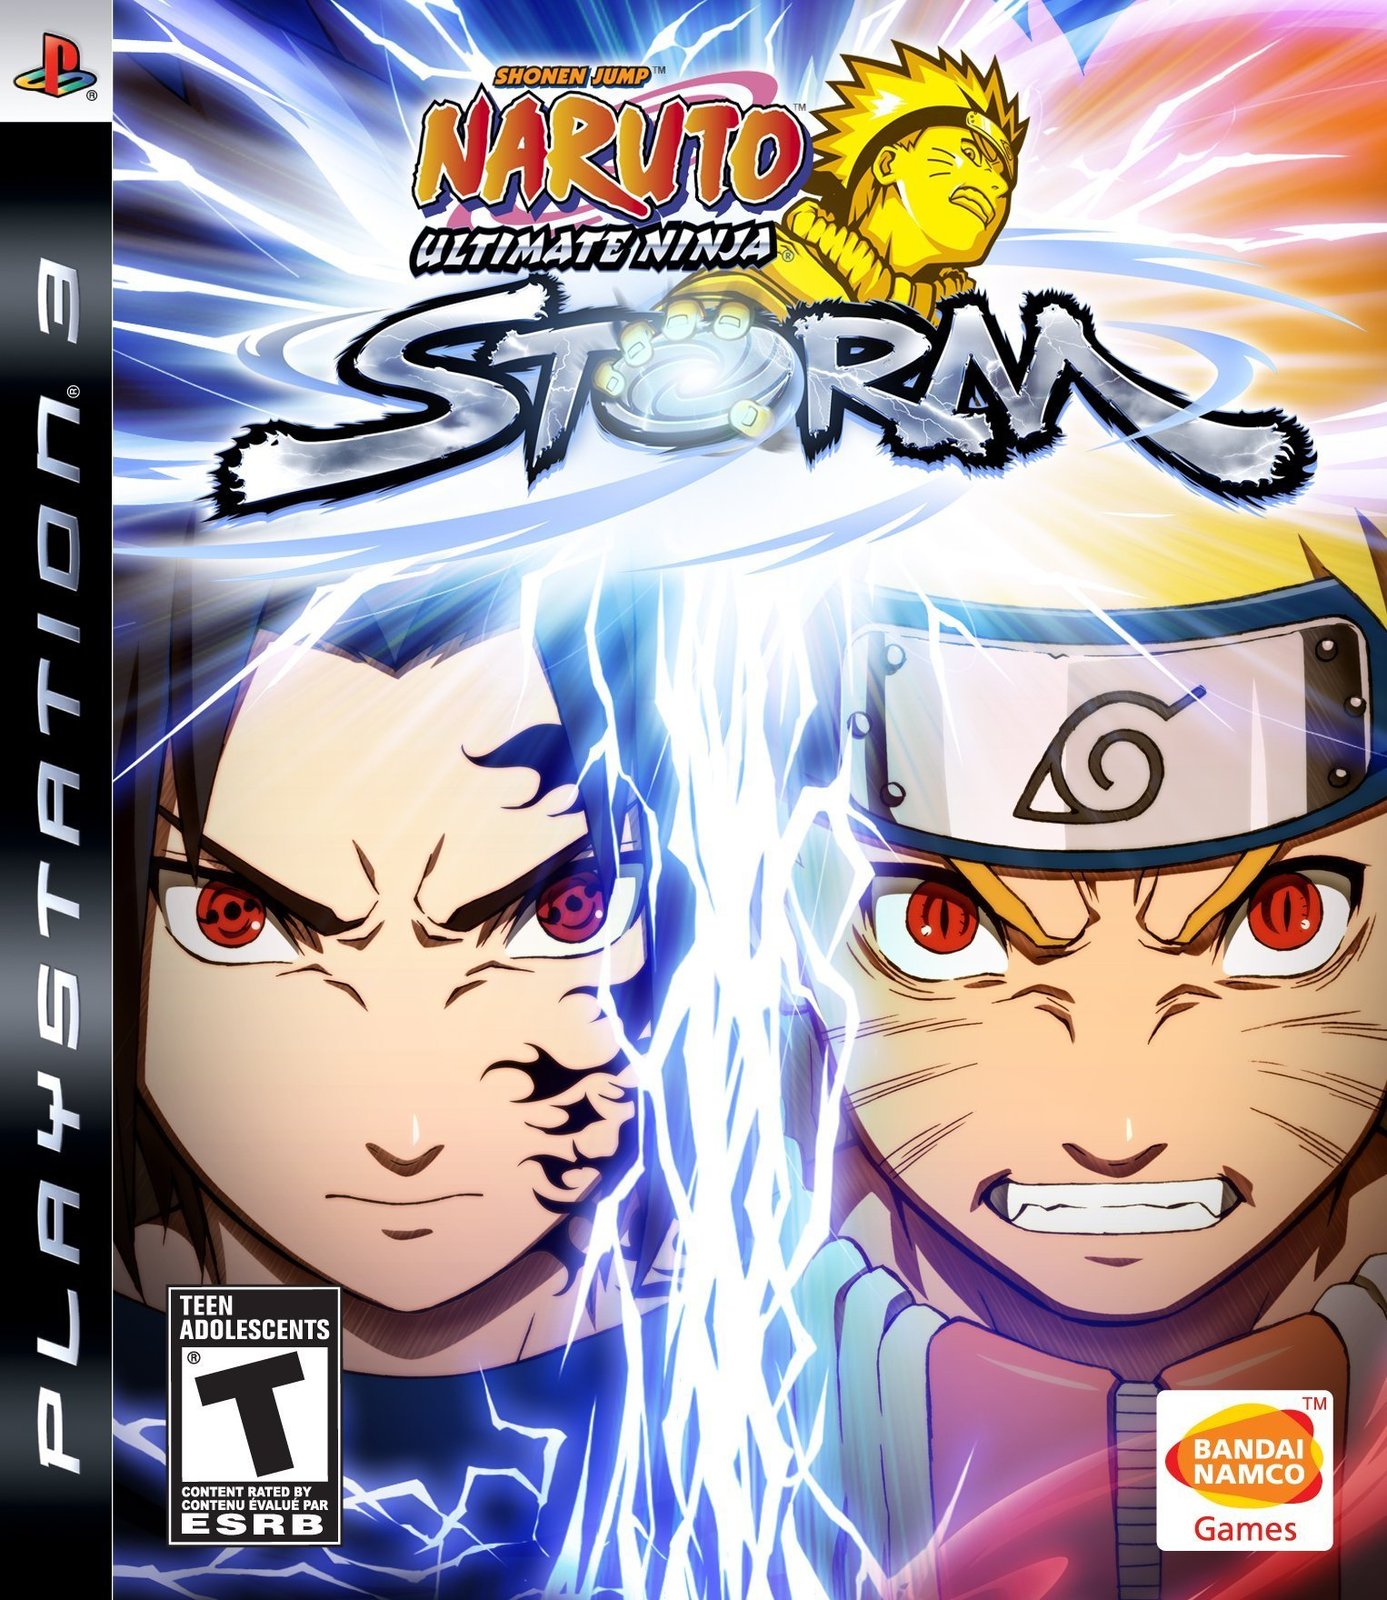 Naruto: Ultimate Ninja Storm | Narutopedia | Fandom powered by Wikia